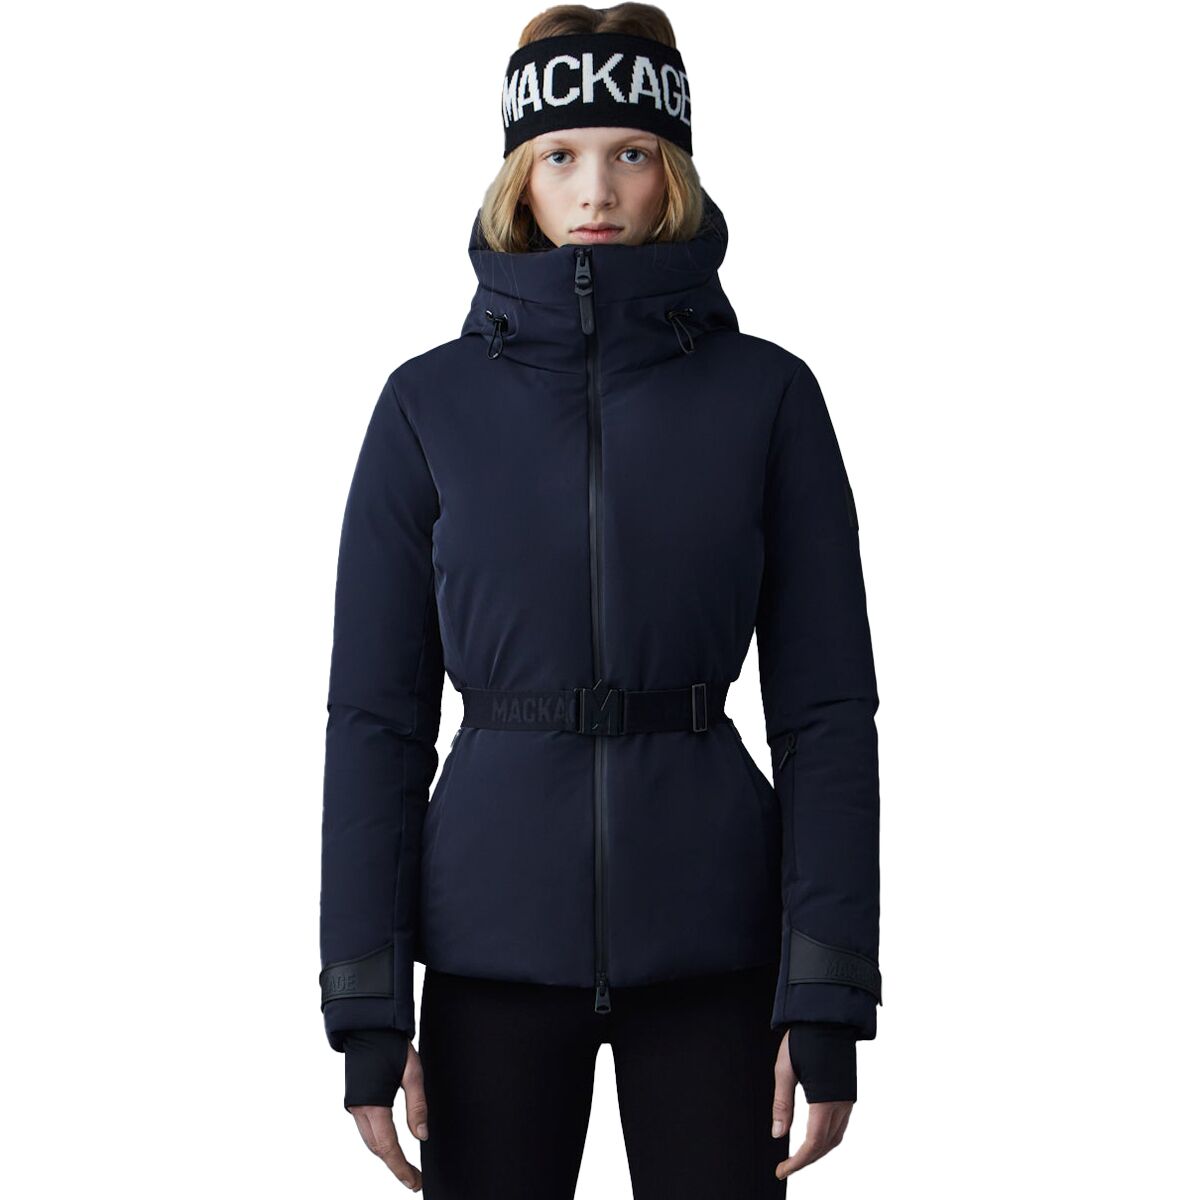 Mackage Krystal No-Fur Jacket - Women's Black